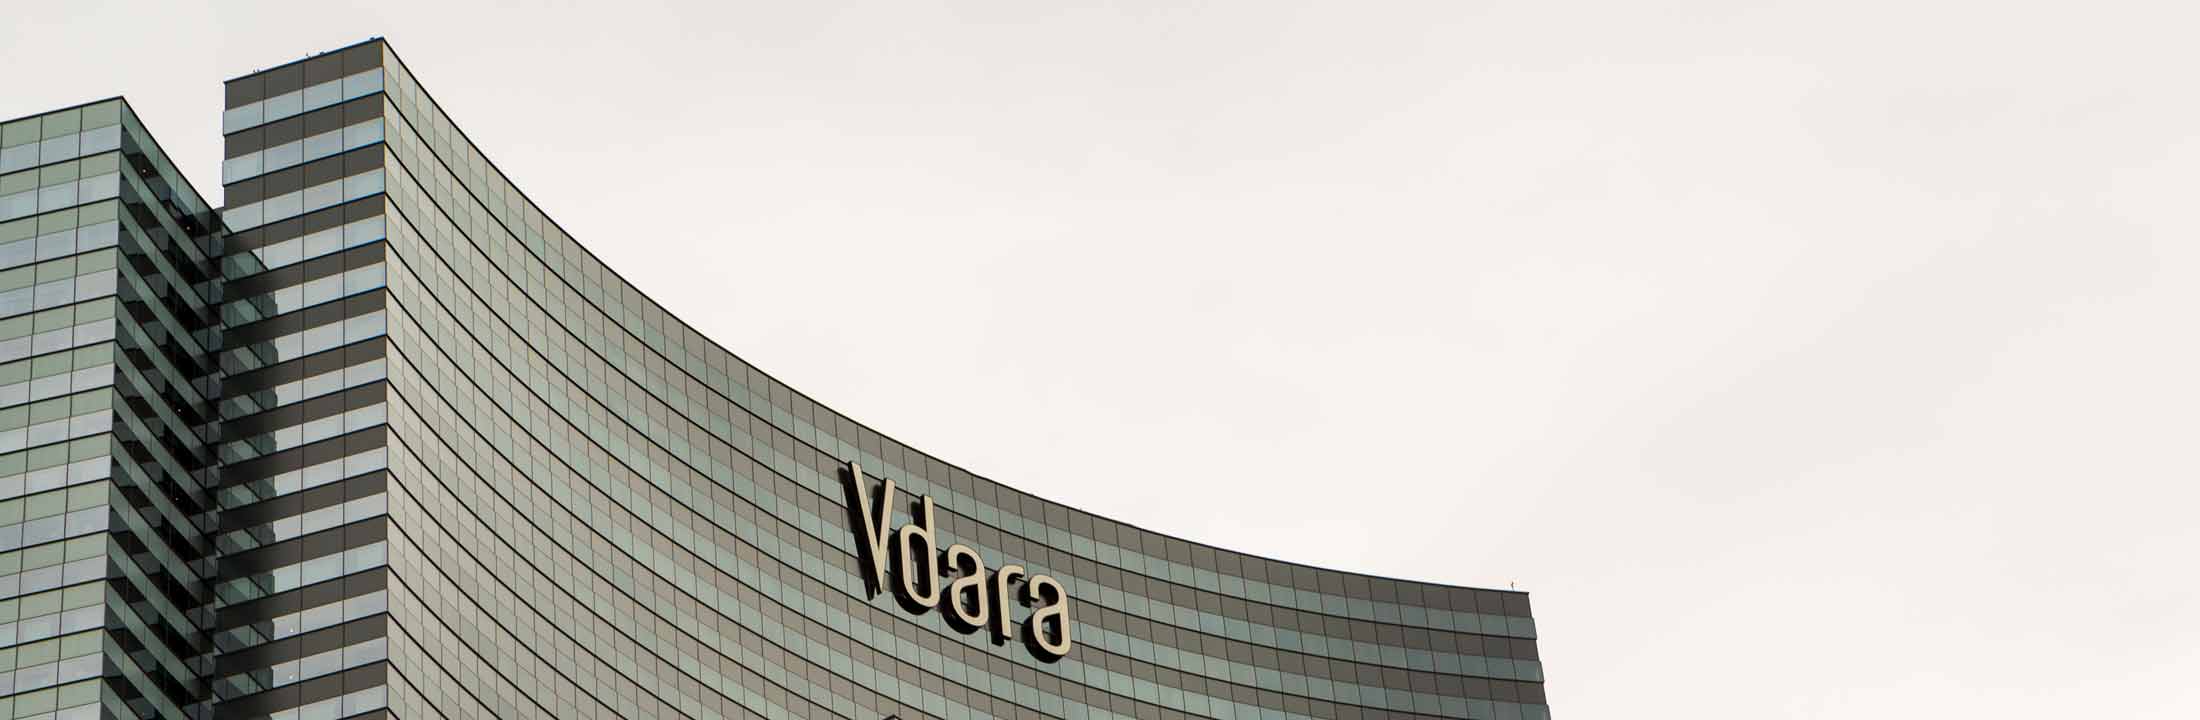 Vdara Logo - Vdara Condos for Sale in Las Vegas